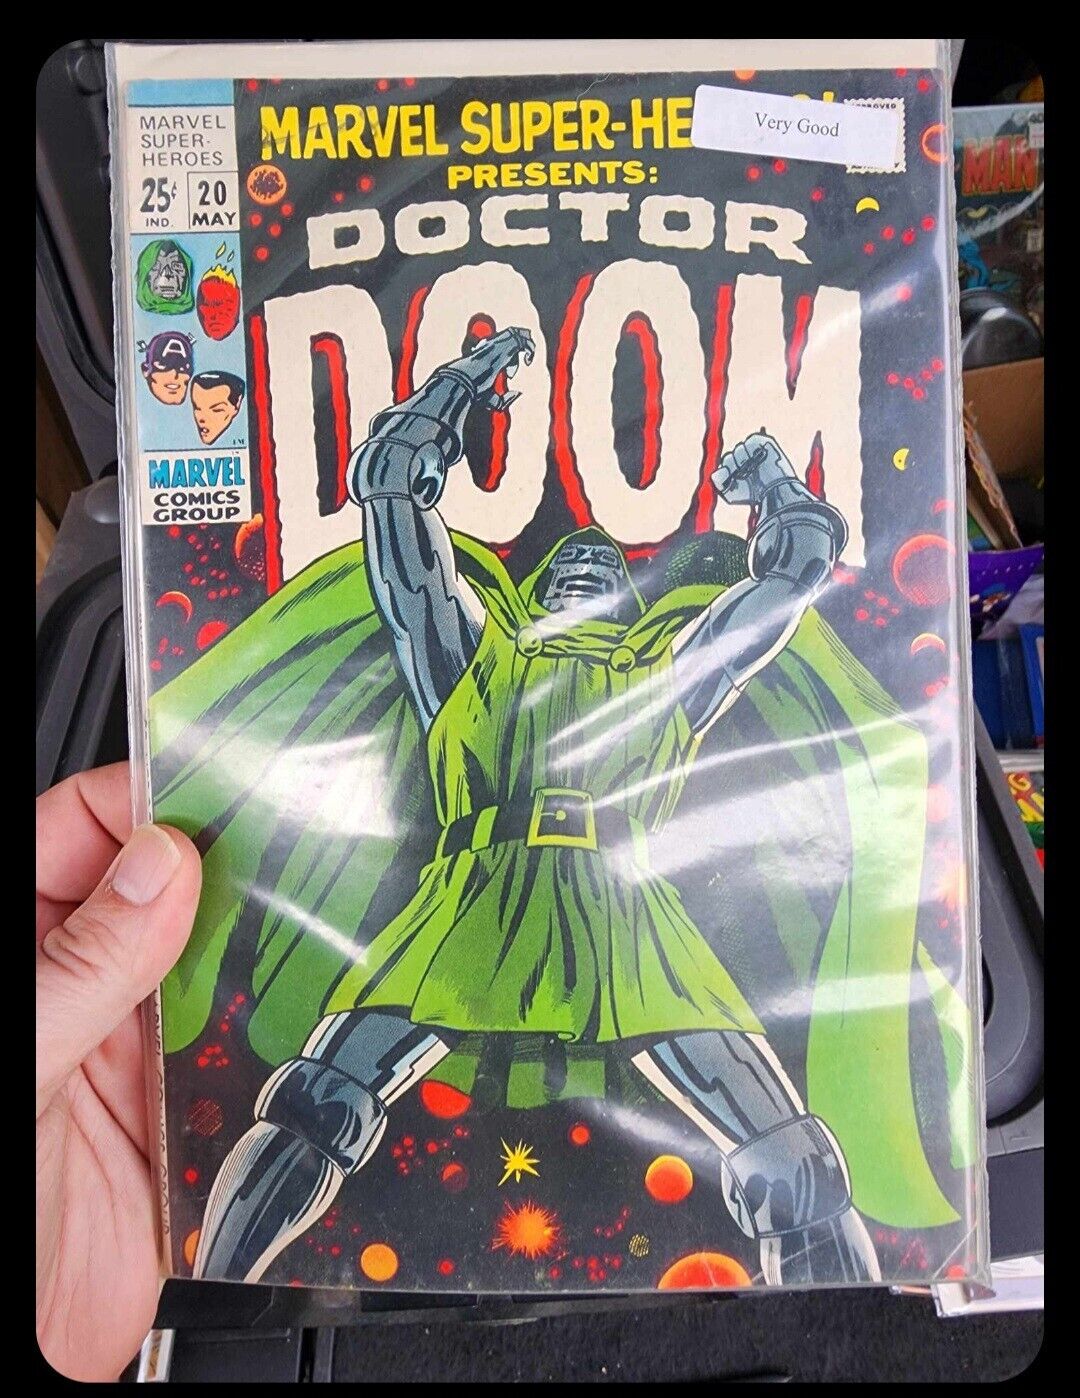 MARVEL SUPER HEROES # 20 May 1969 DOCTOR DOOM ORIGIN vs DIABLO.